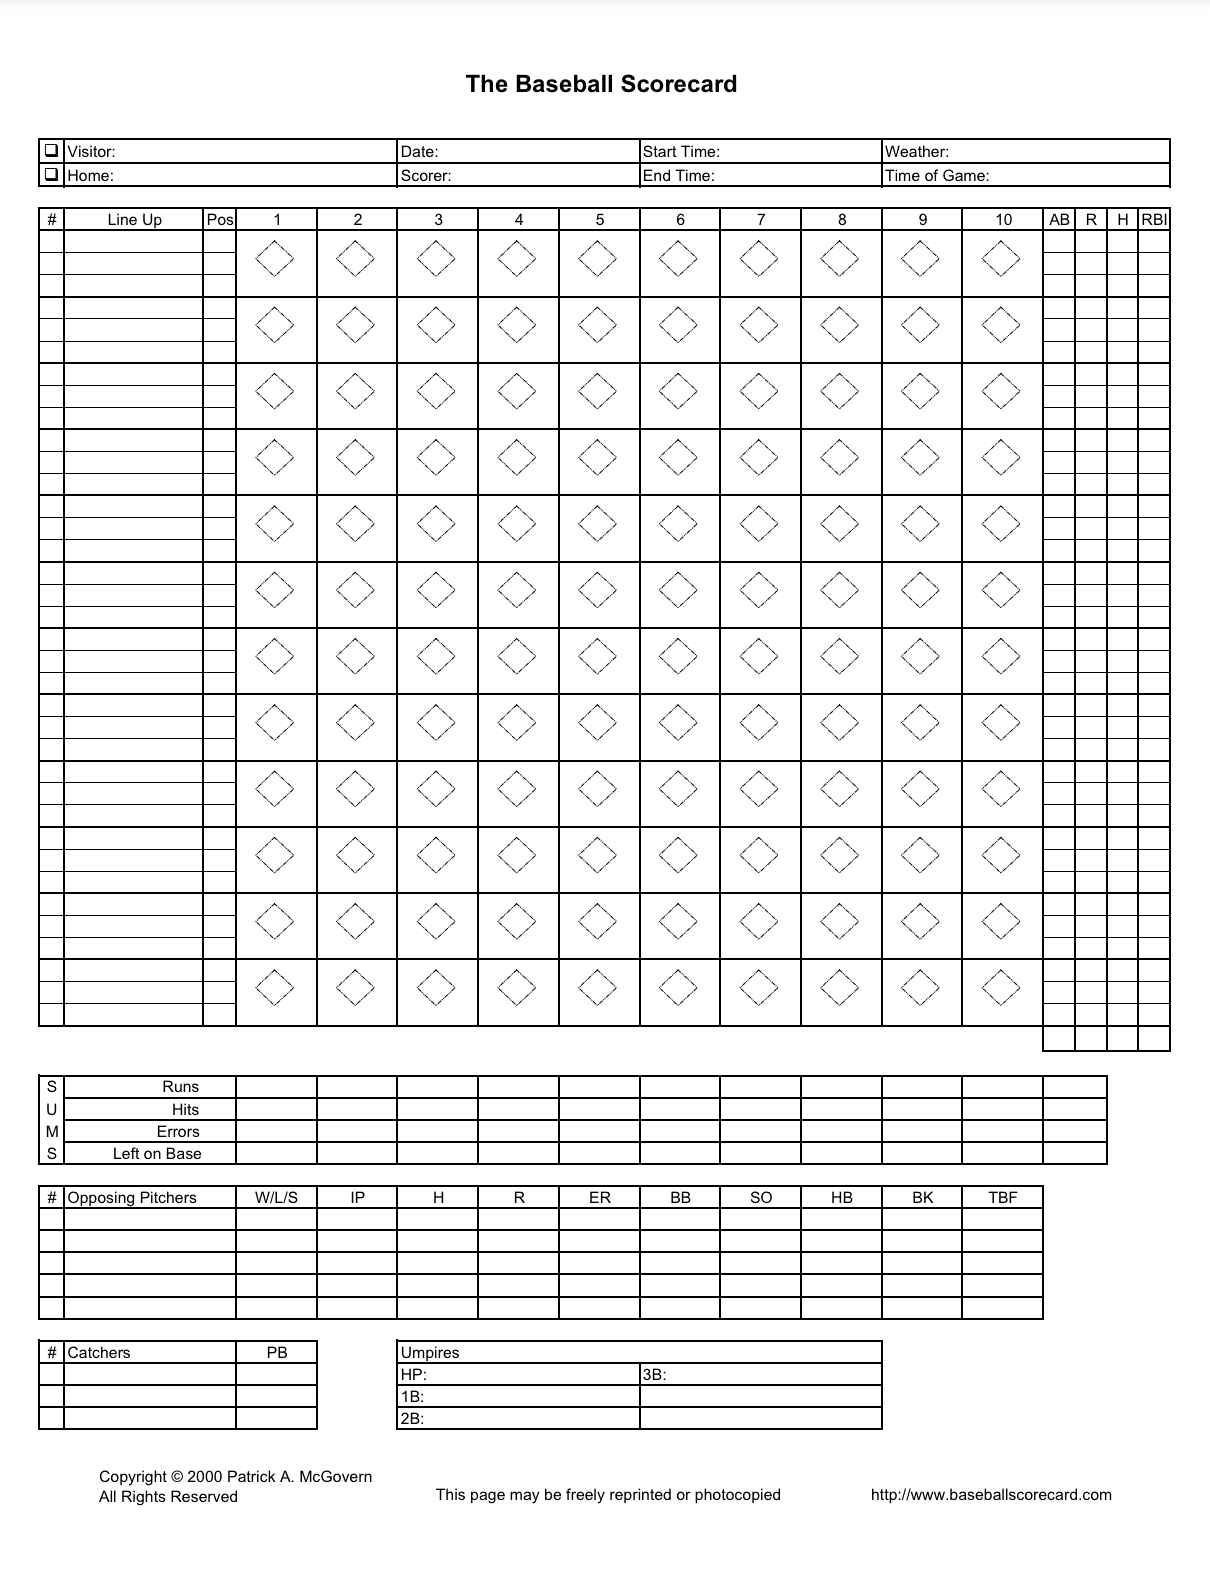 Patrick A. McGovern baseball scorecard, minimalist version.